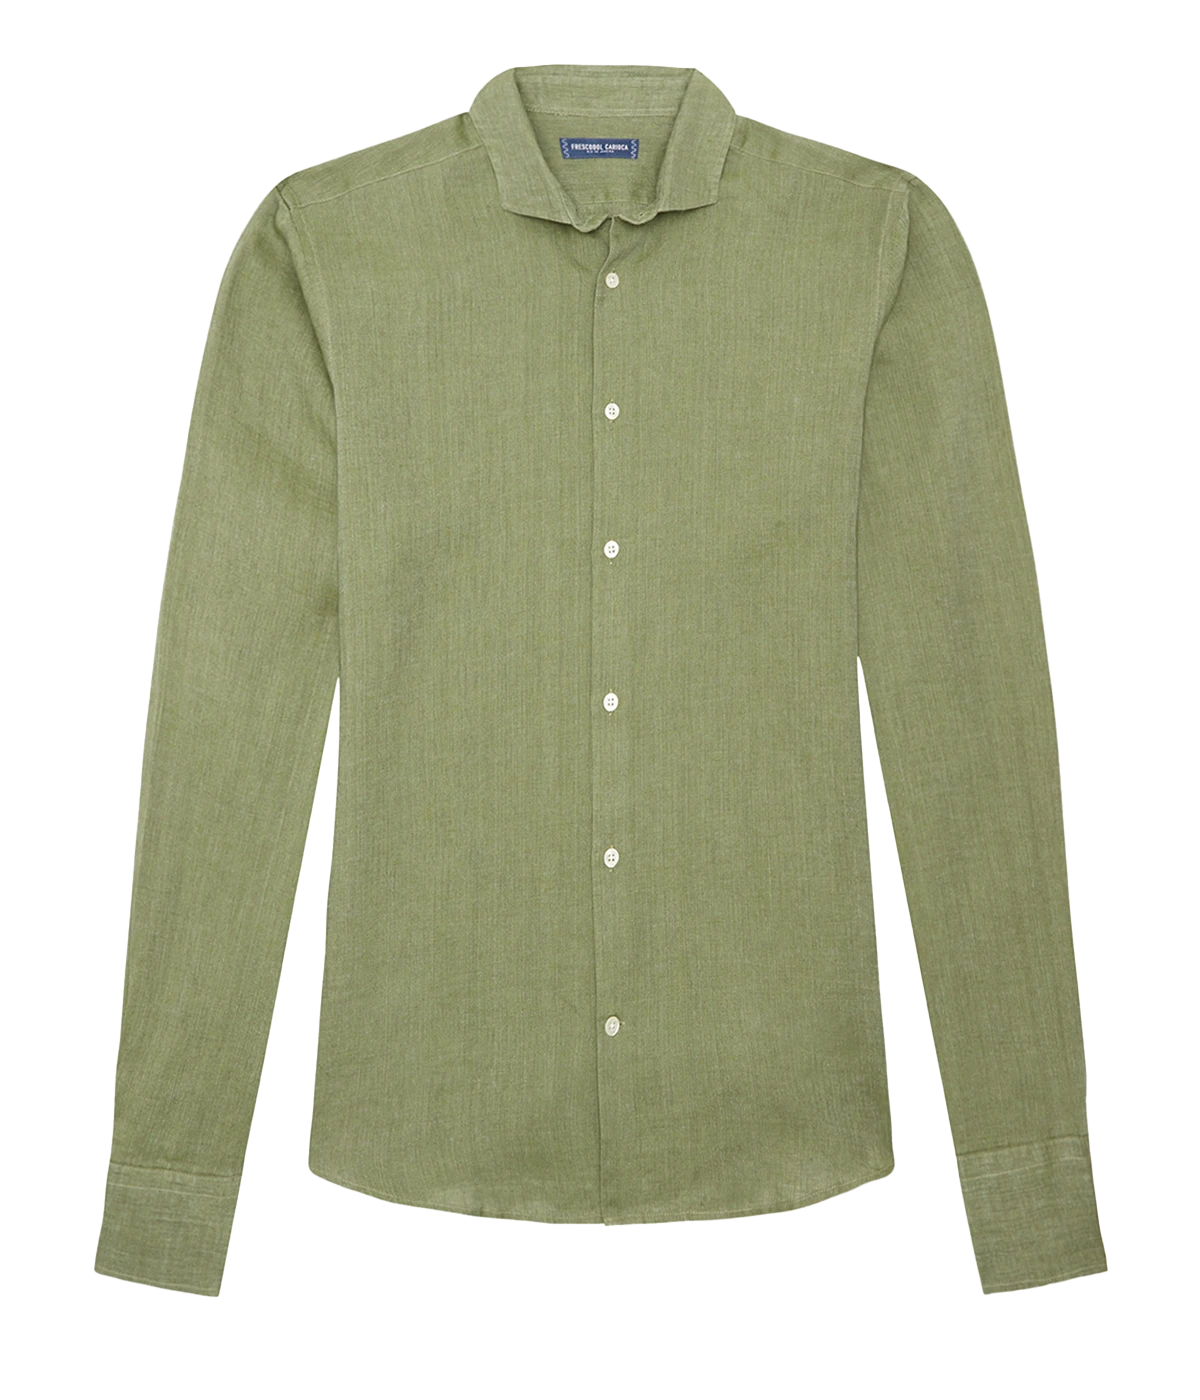 Antonio Linen Long Sleeve Shirt in Jungle Green